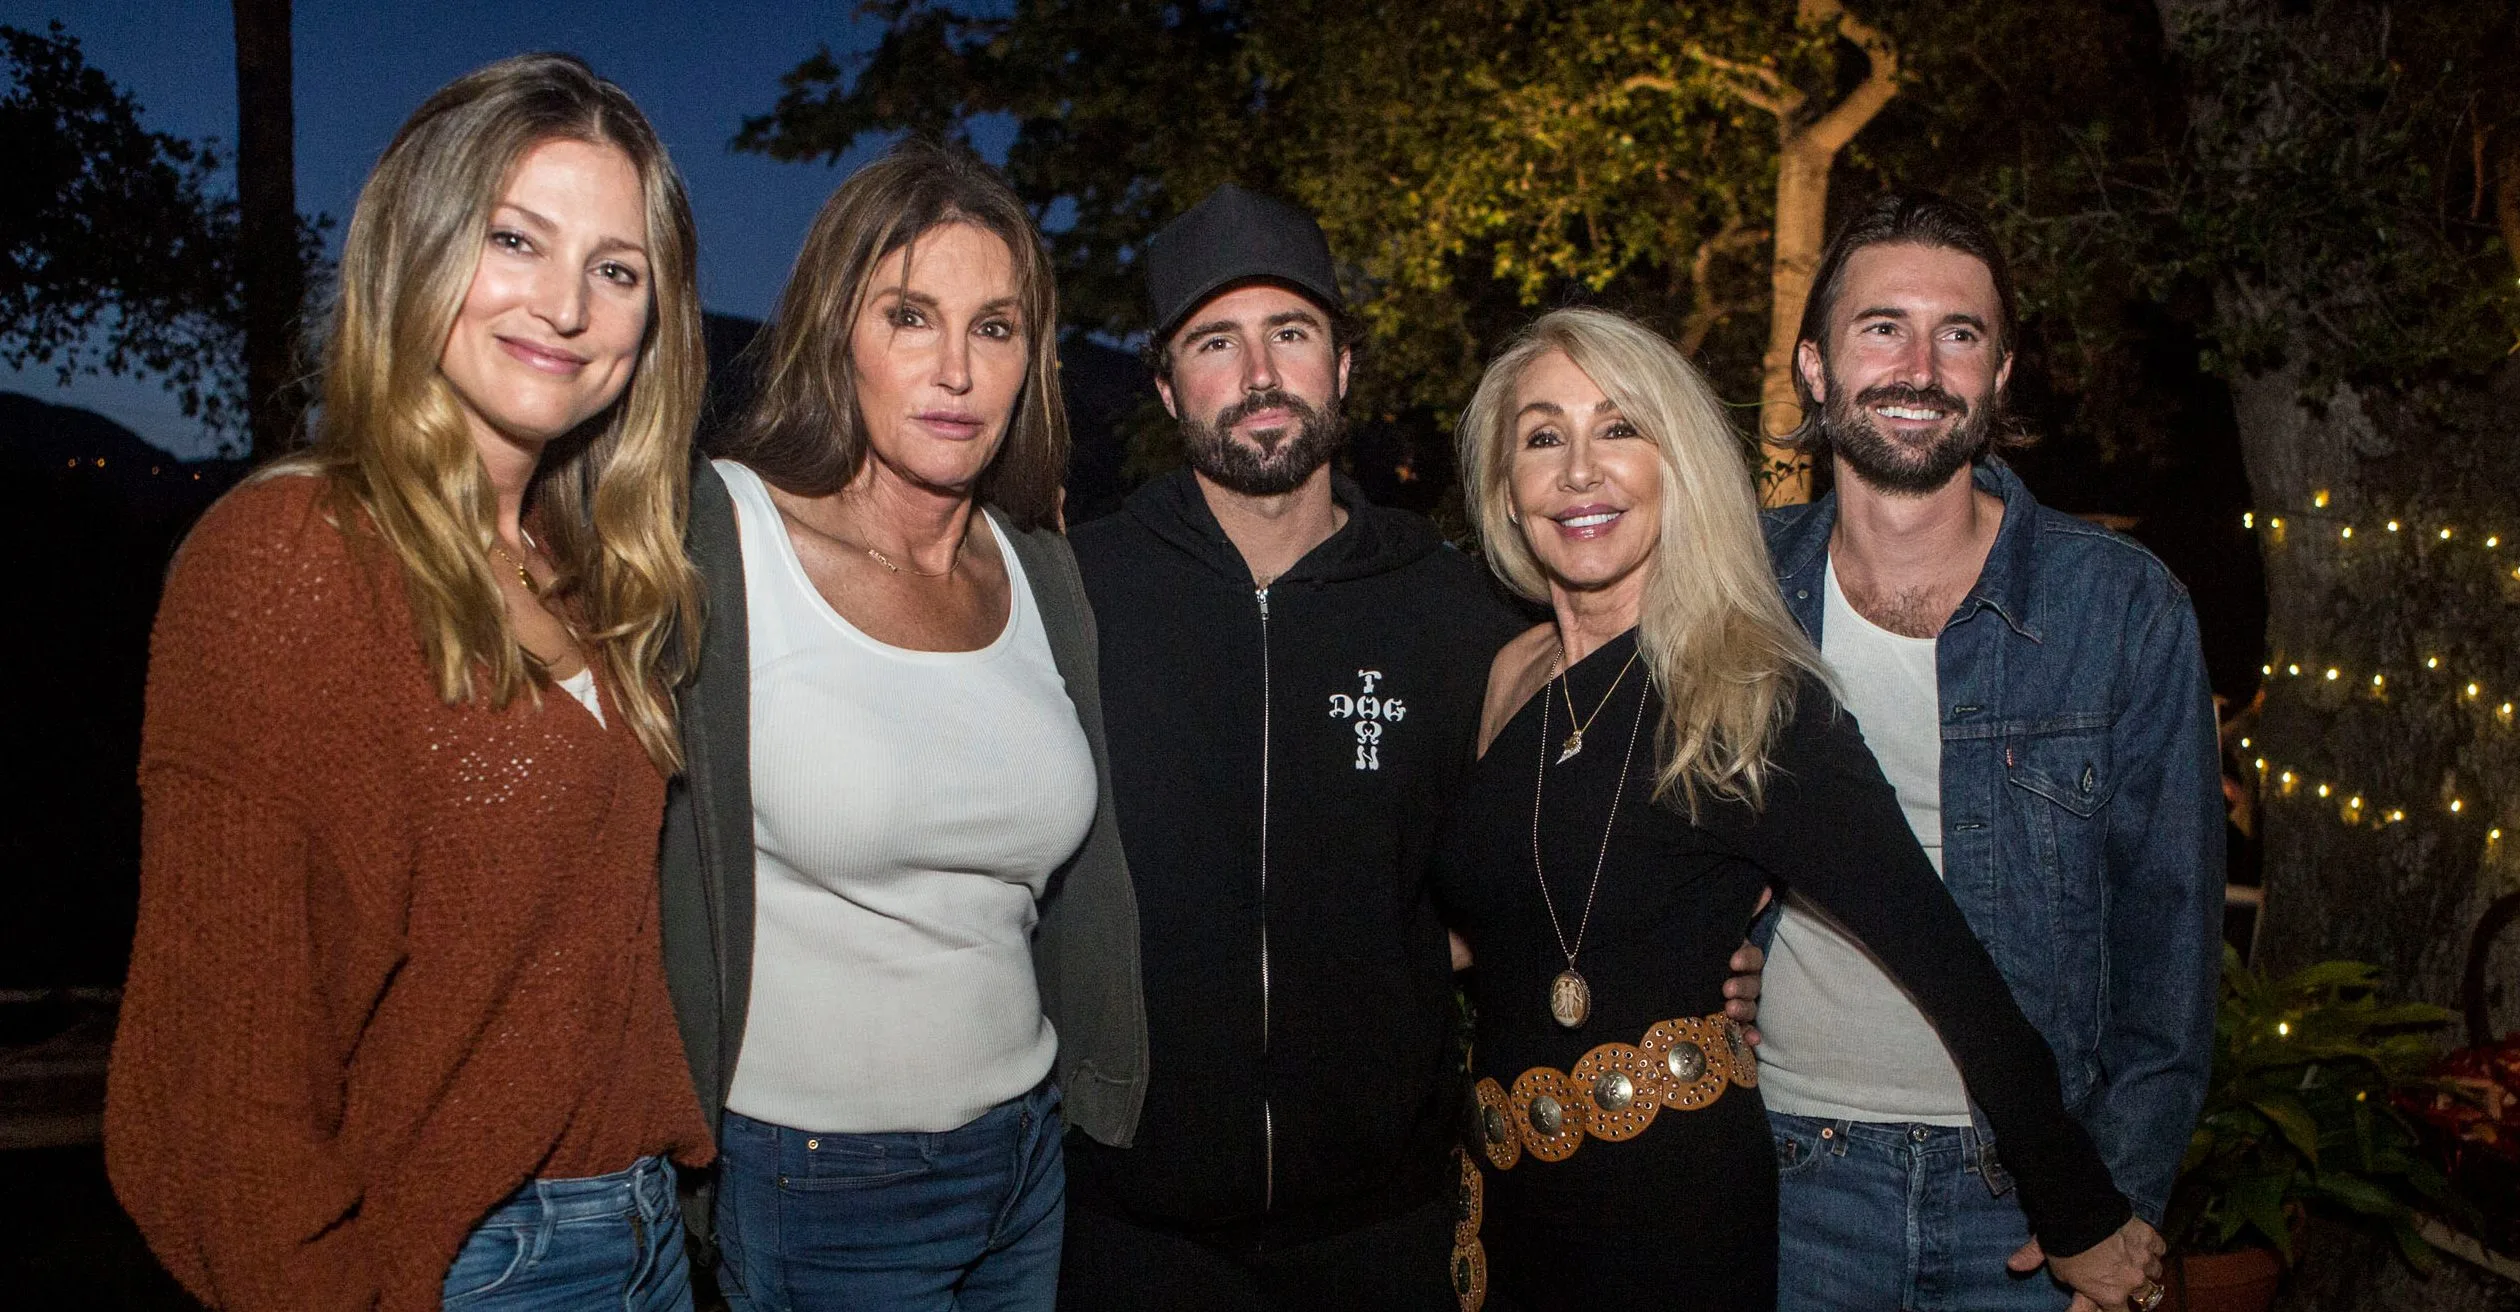 Cassandra Marino with Caitlyn Jenner, Brody Jenner, Linda Thompson and Brandon Jenner